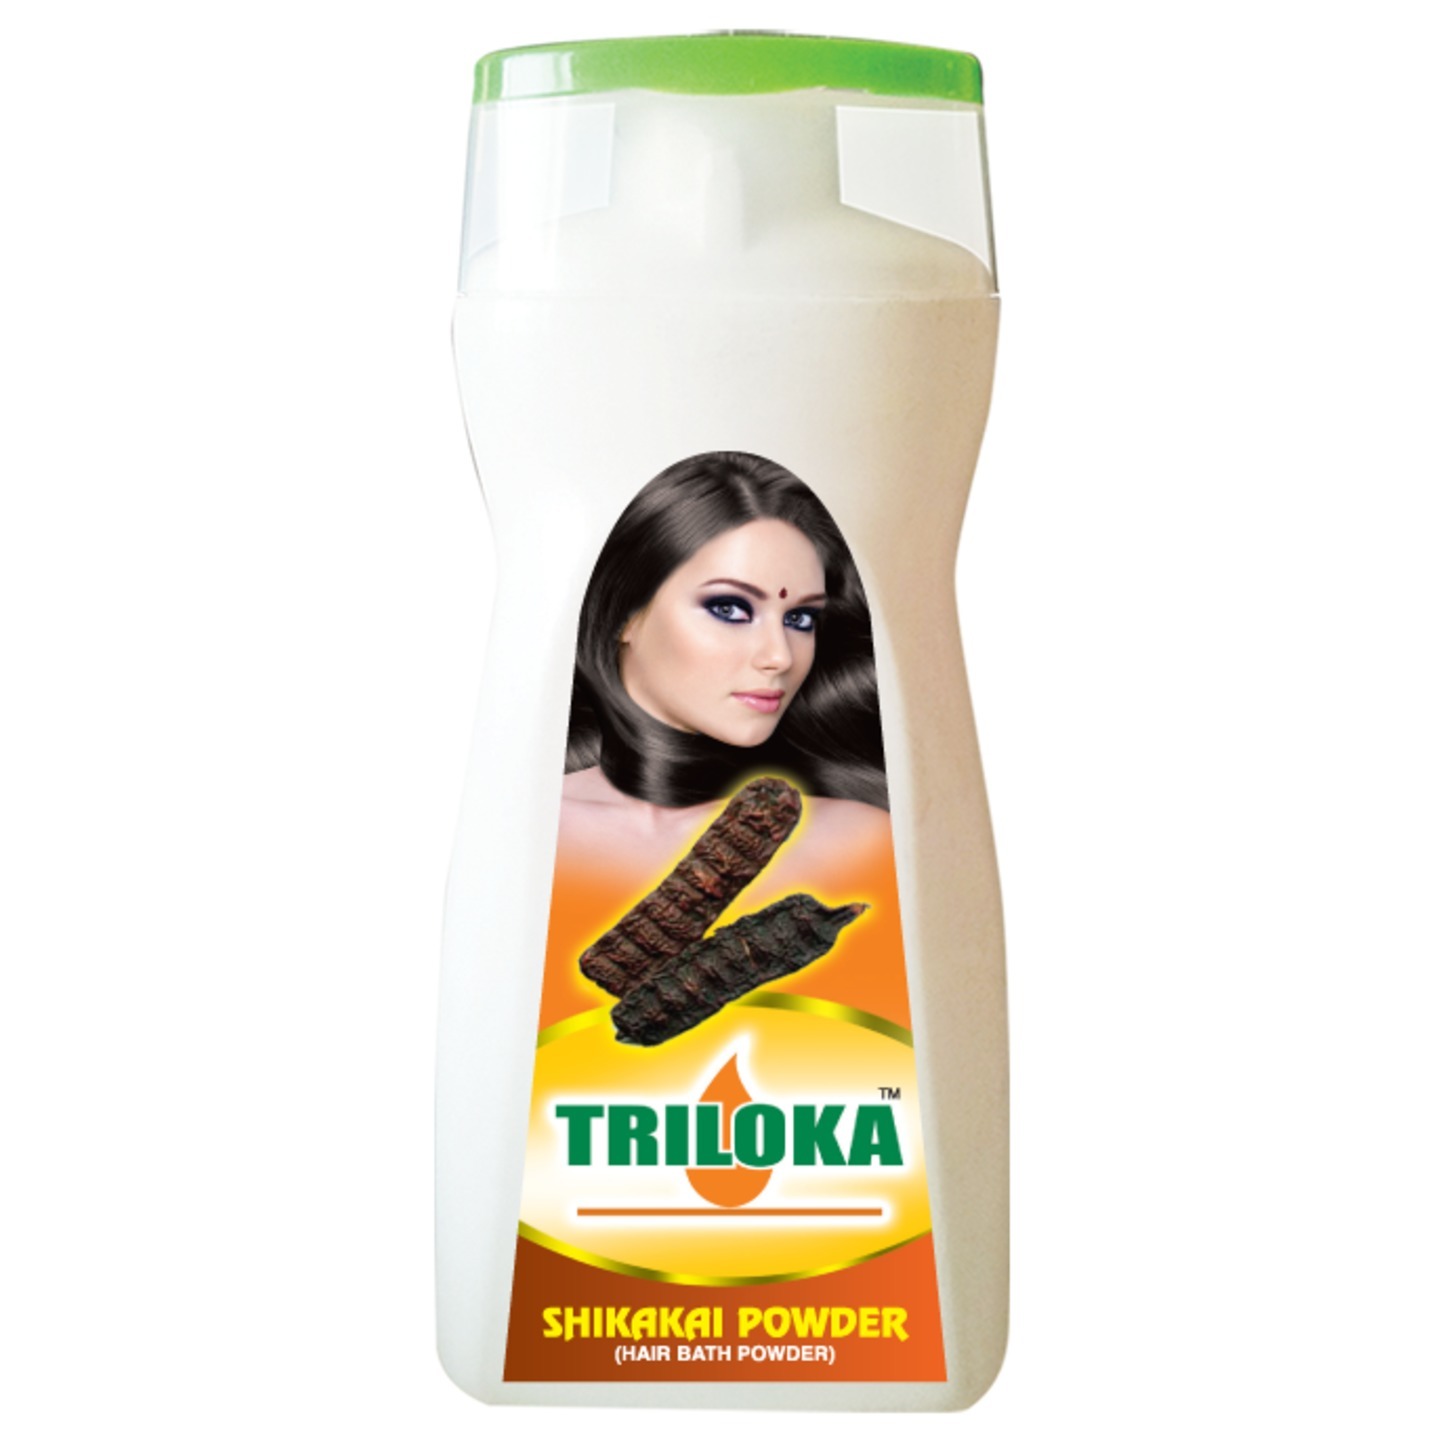 New Triloka Shikakai Head Bathing Powder Bottle ( Shampoo Powder) - 1 Case